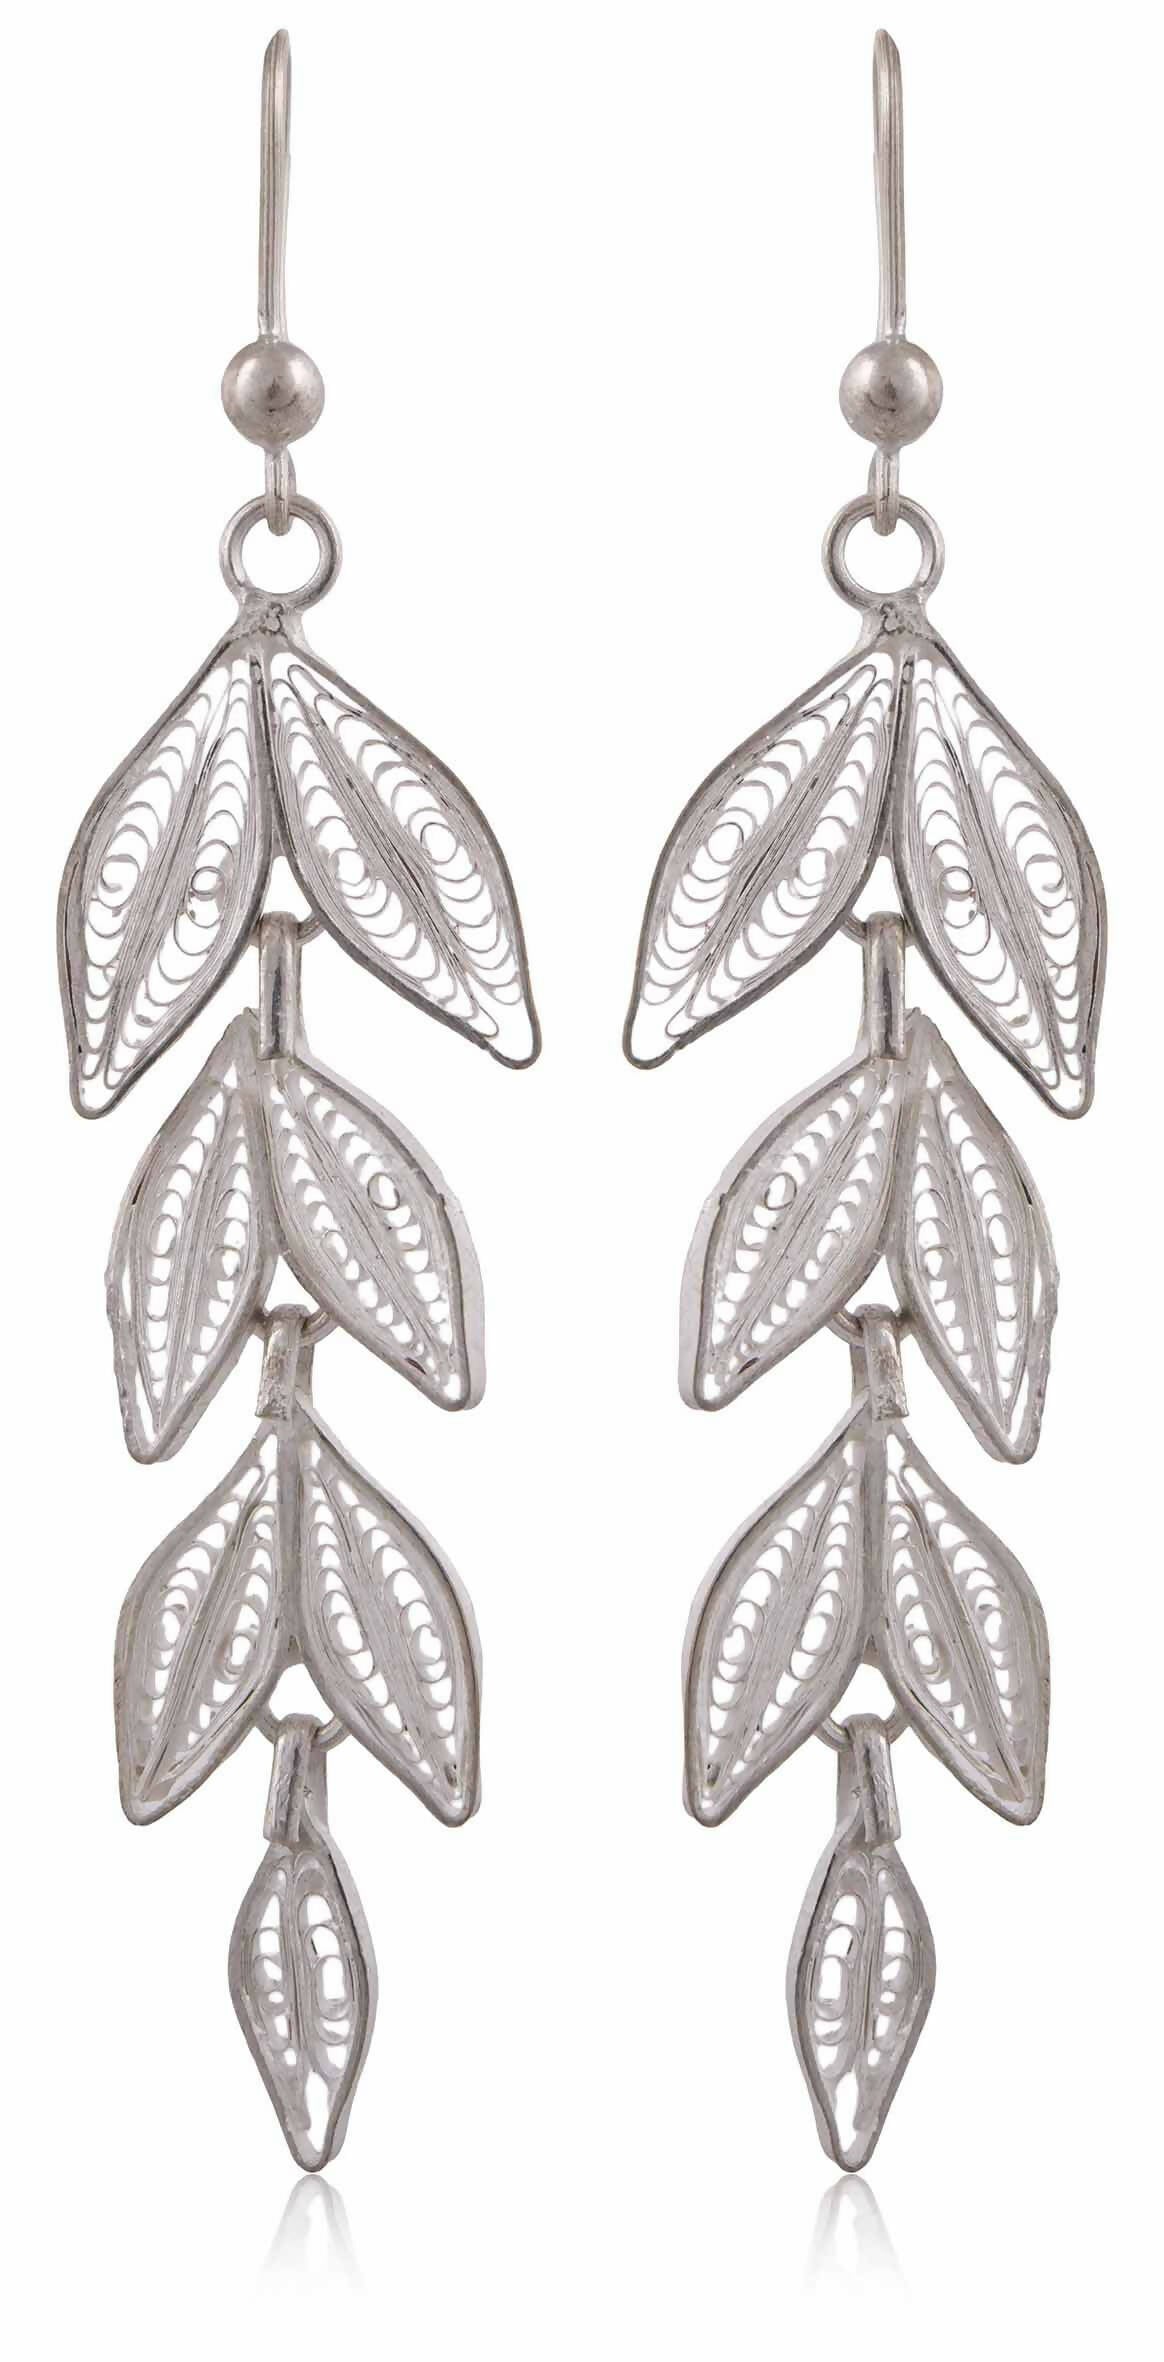 Leaves of Desire - Silver Filigree earrings SJ-988 - Fashion & Lifestyle - 2